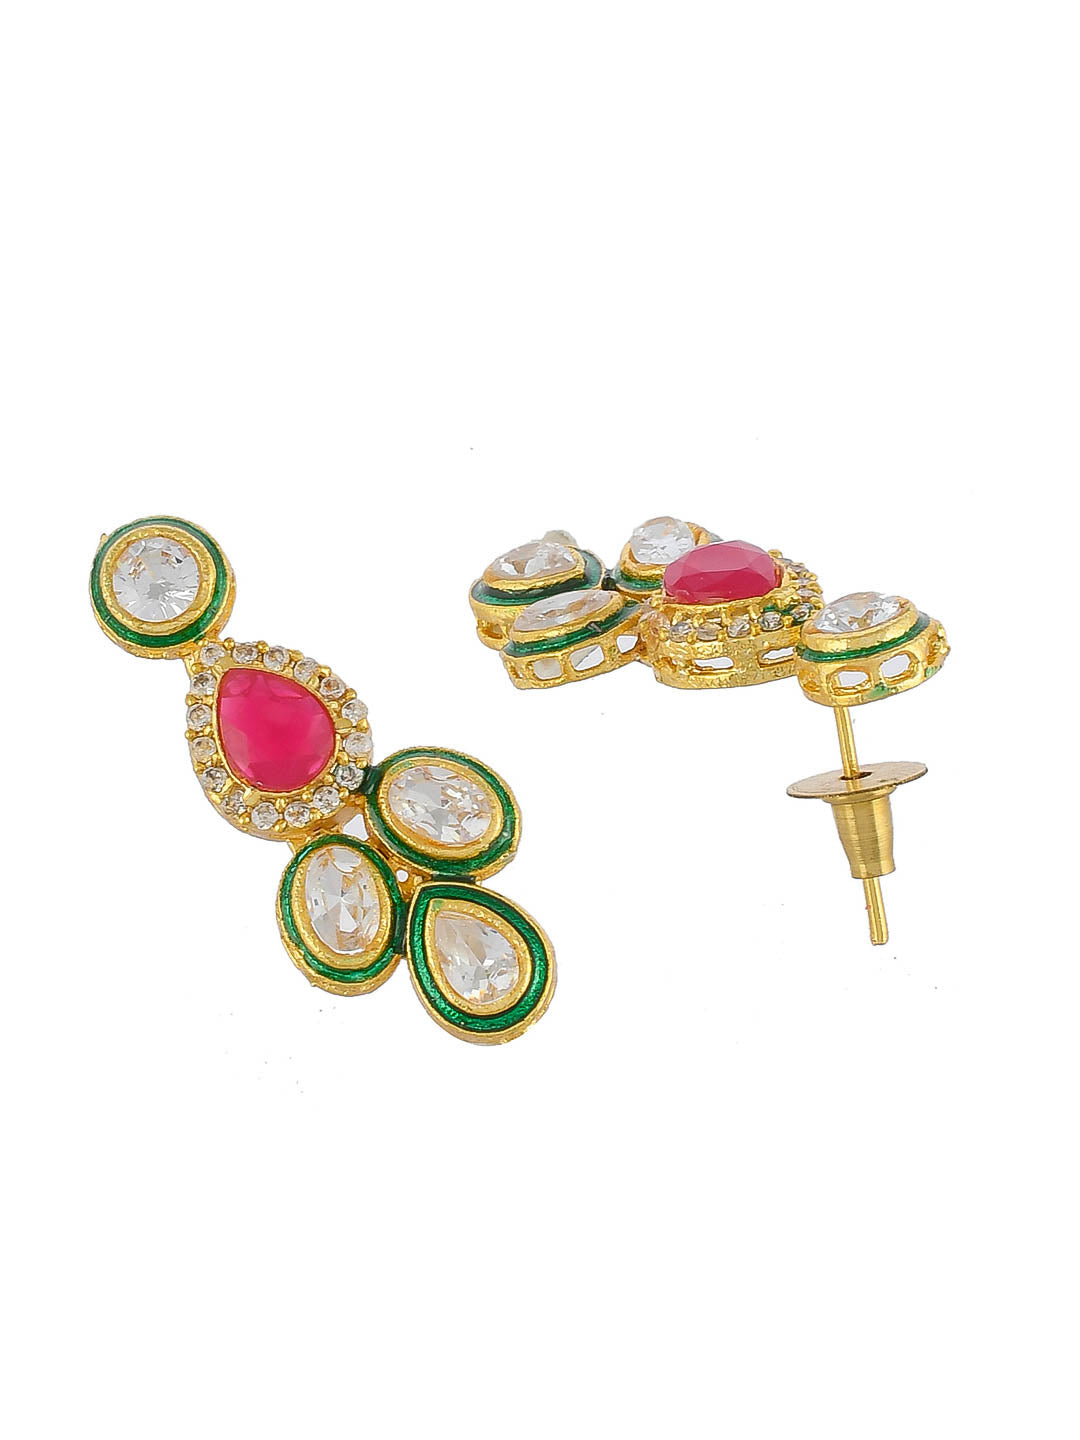 Indian Ethnic Gold Kundan Choker Necklace Set For Women Girls